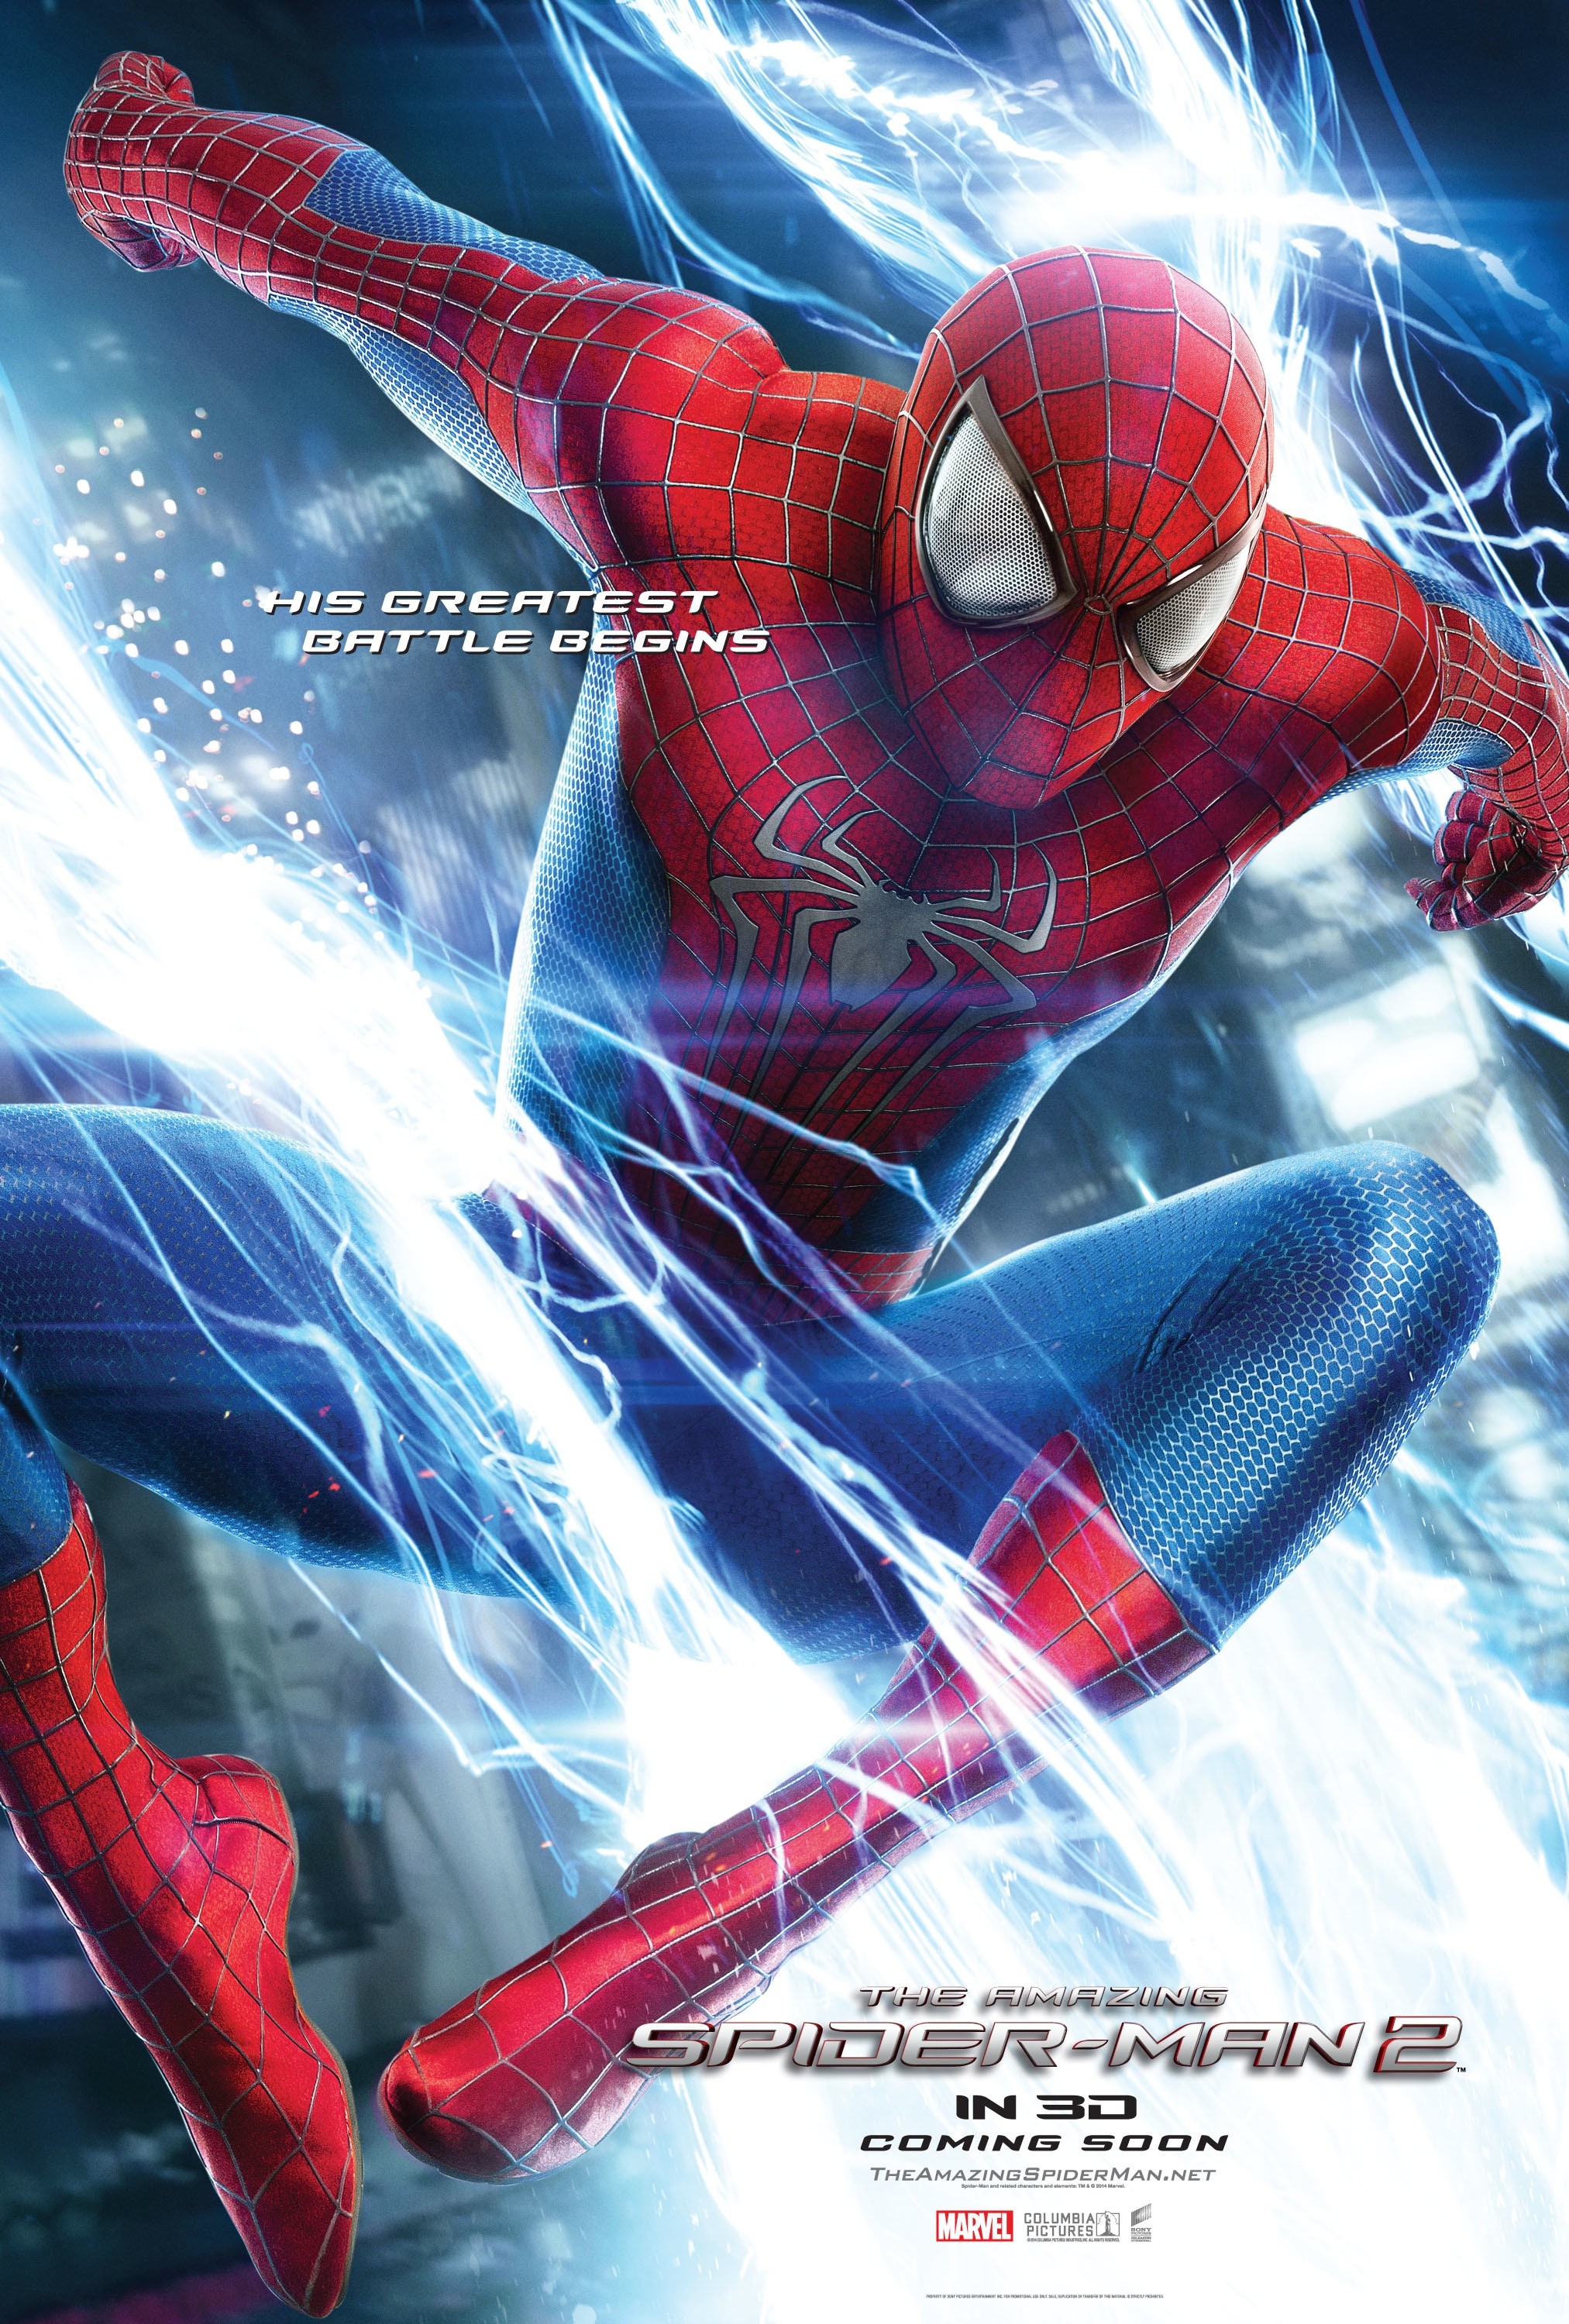 http://st-im.kinopoisk.ru/im/poster/2/4/0/kinopoisk.ru-The-Amazing-Spider-Man-2-2406907--o--.jpg